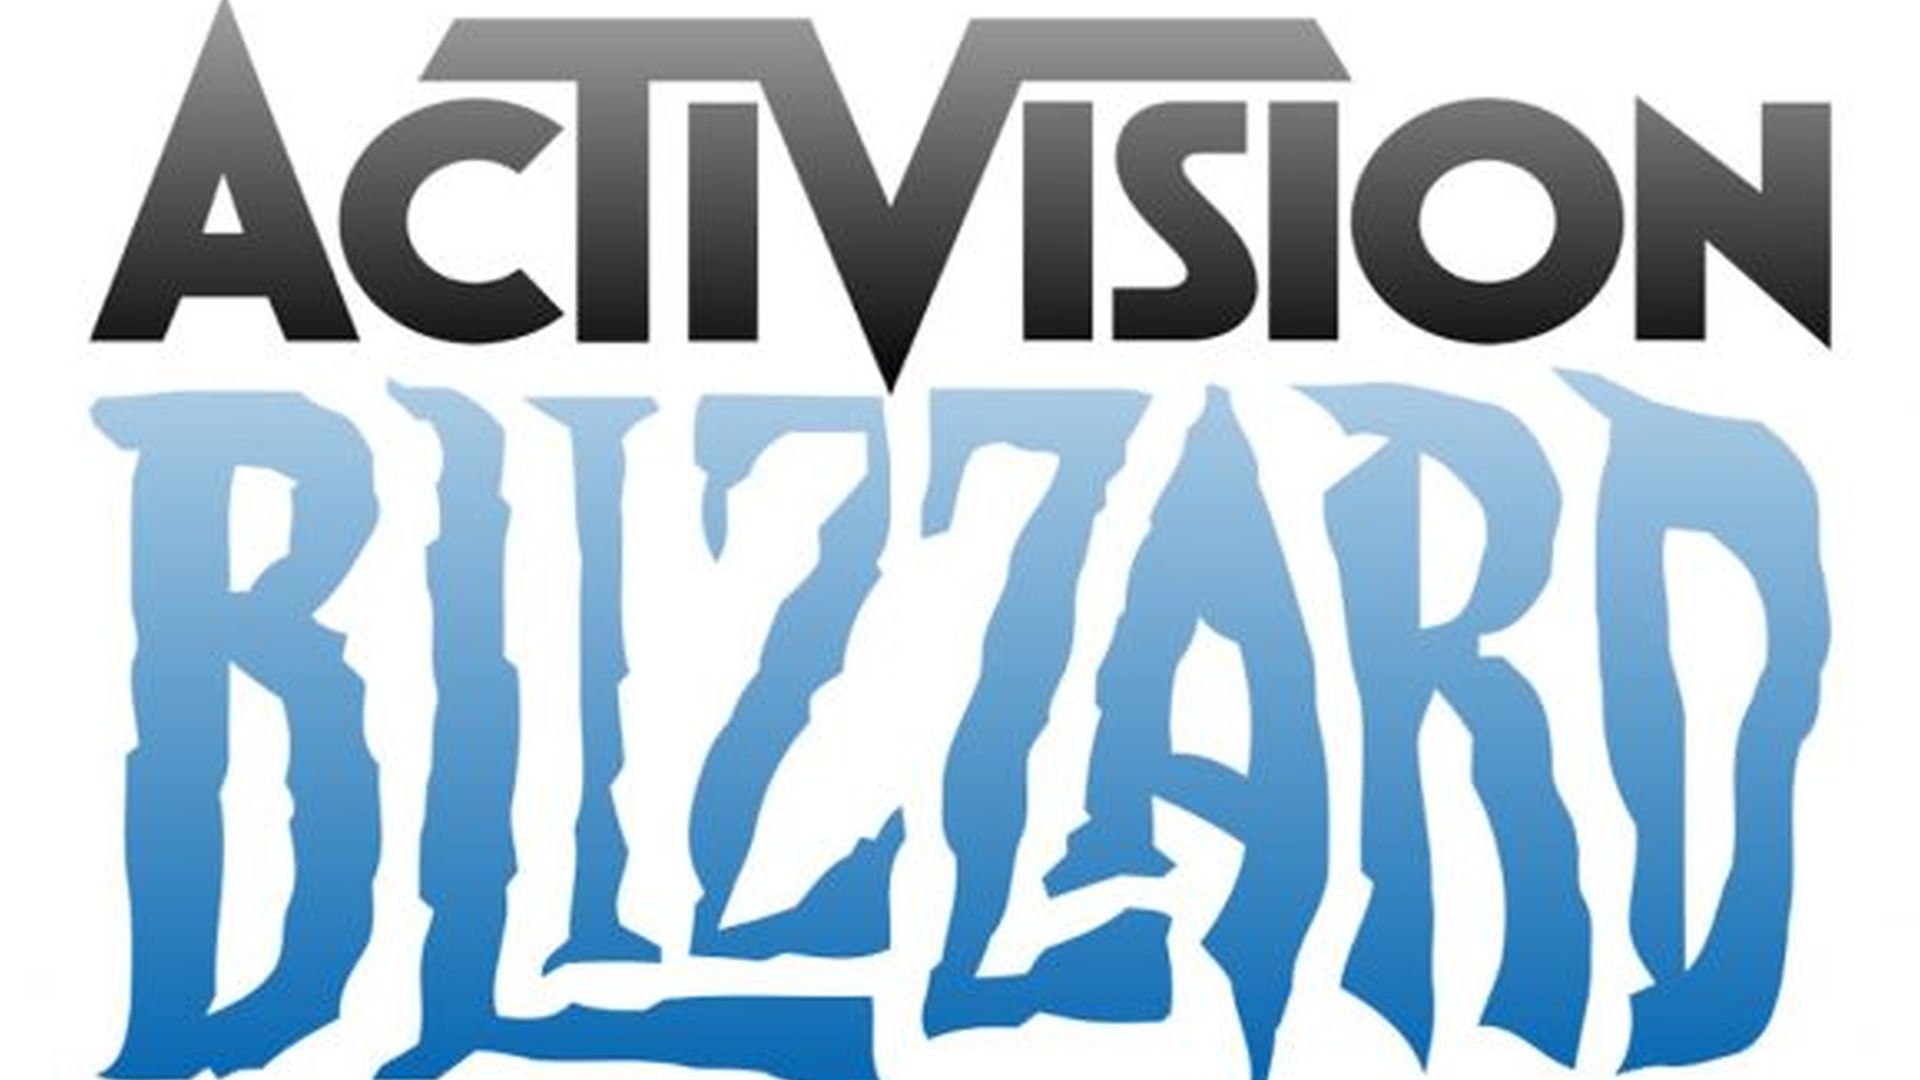 QA සහ පාරිභෝගික සේවා කොන්ත්‍රාත්කරුවන් සඳහා Activision Blizzard නඩුව පුළුල් වේ